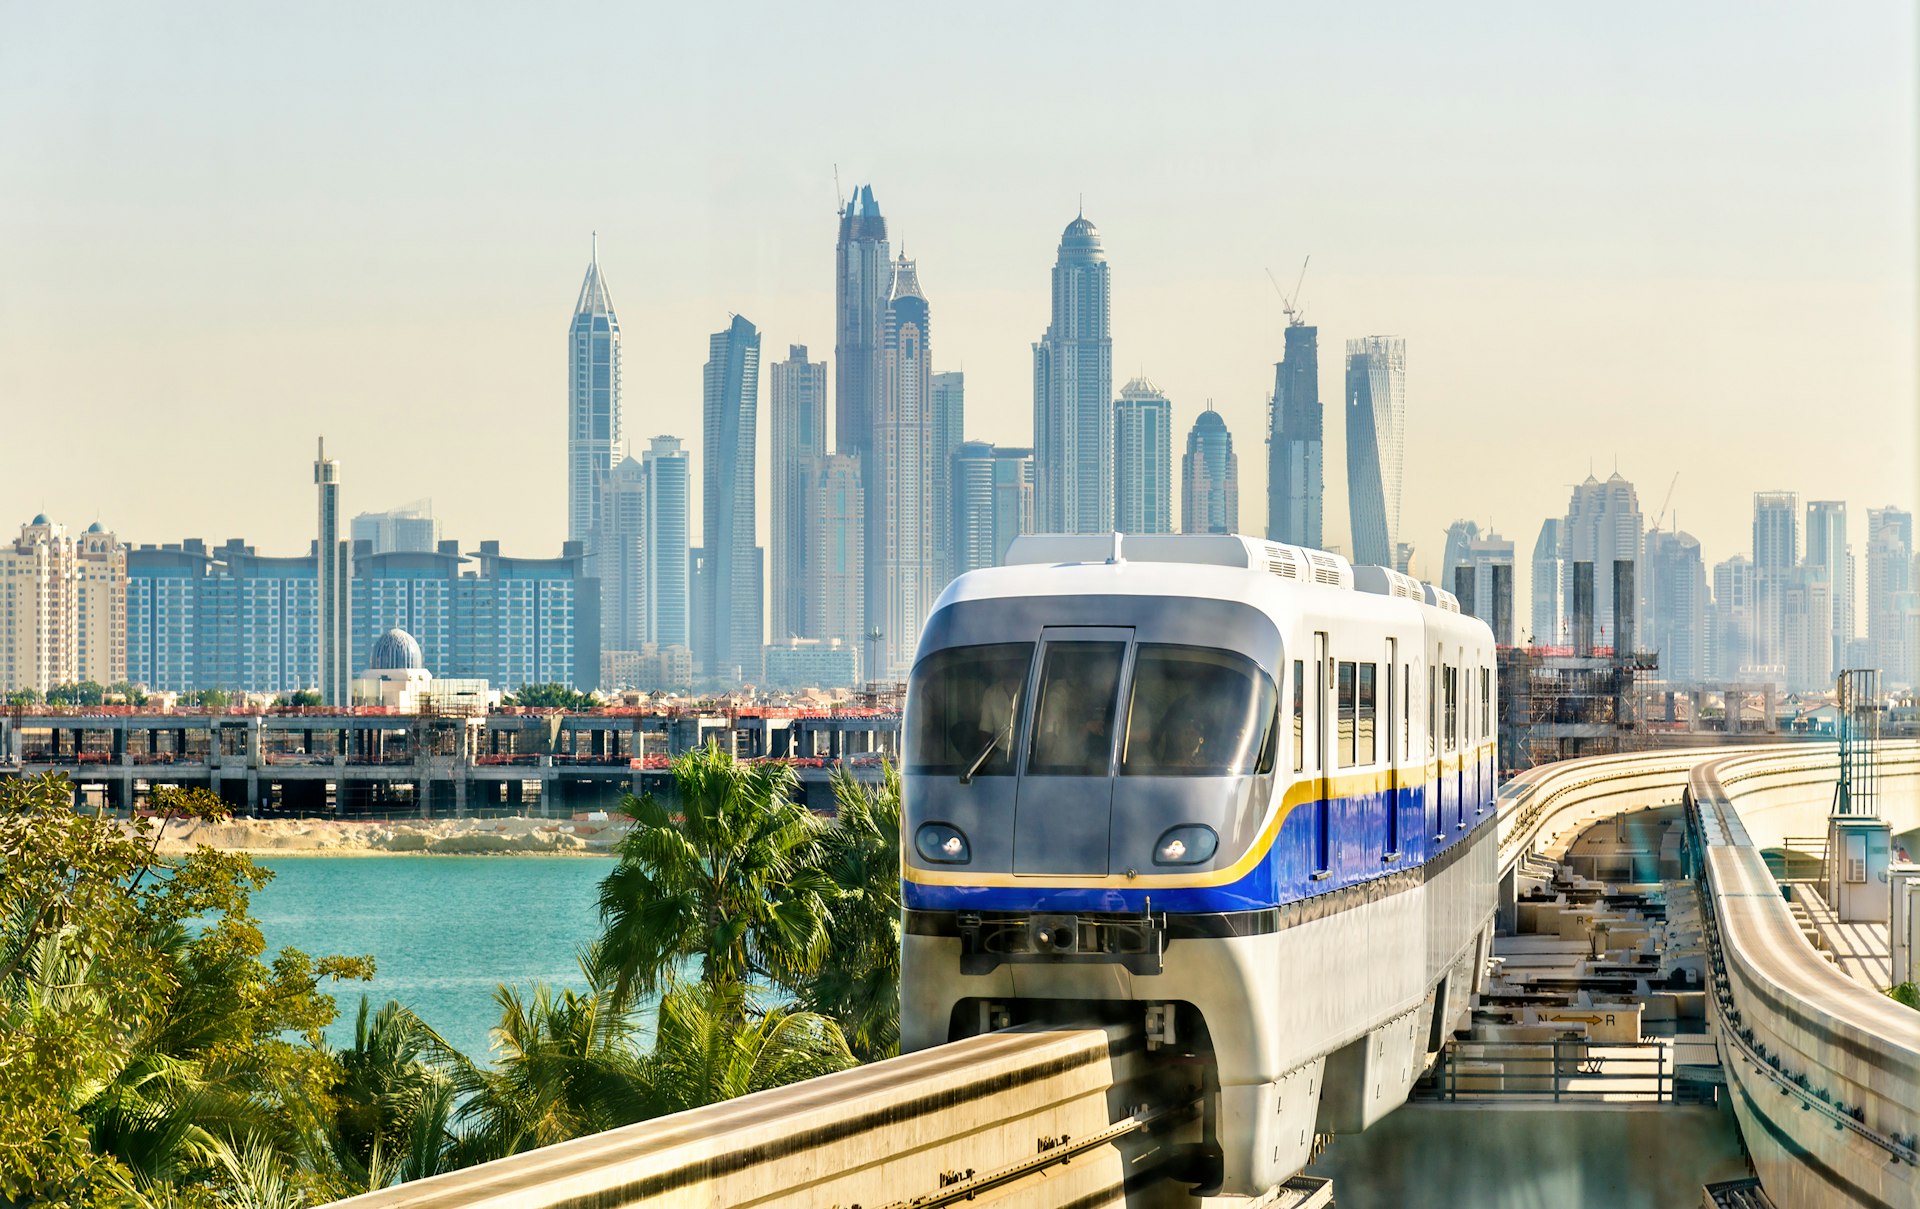 Arriving at Atlantis Monorail station, Dubai